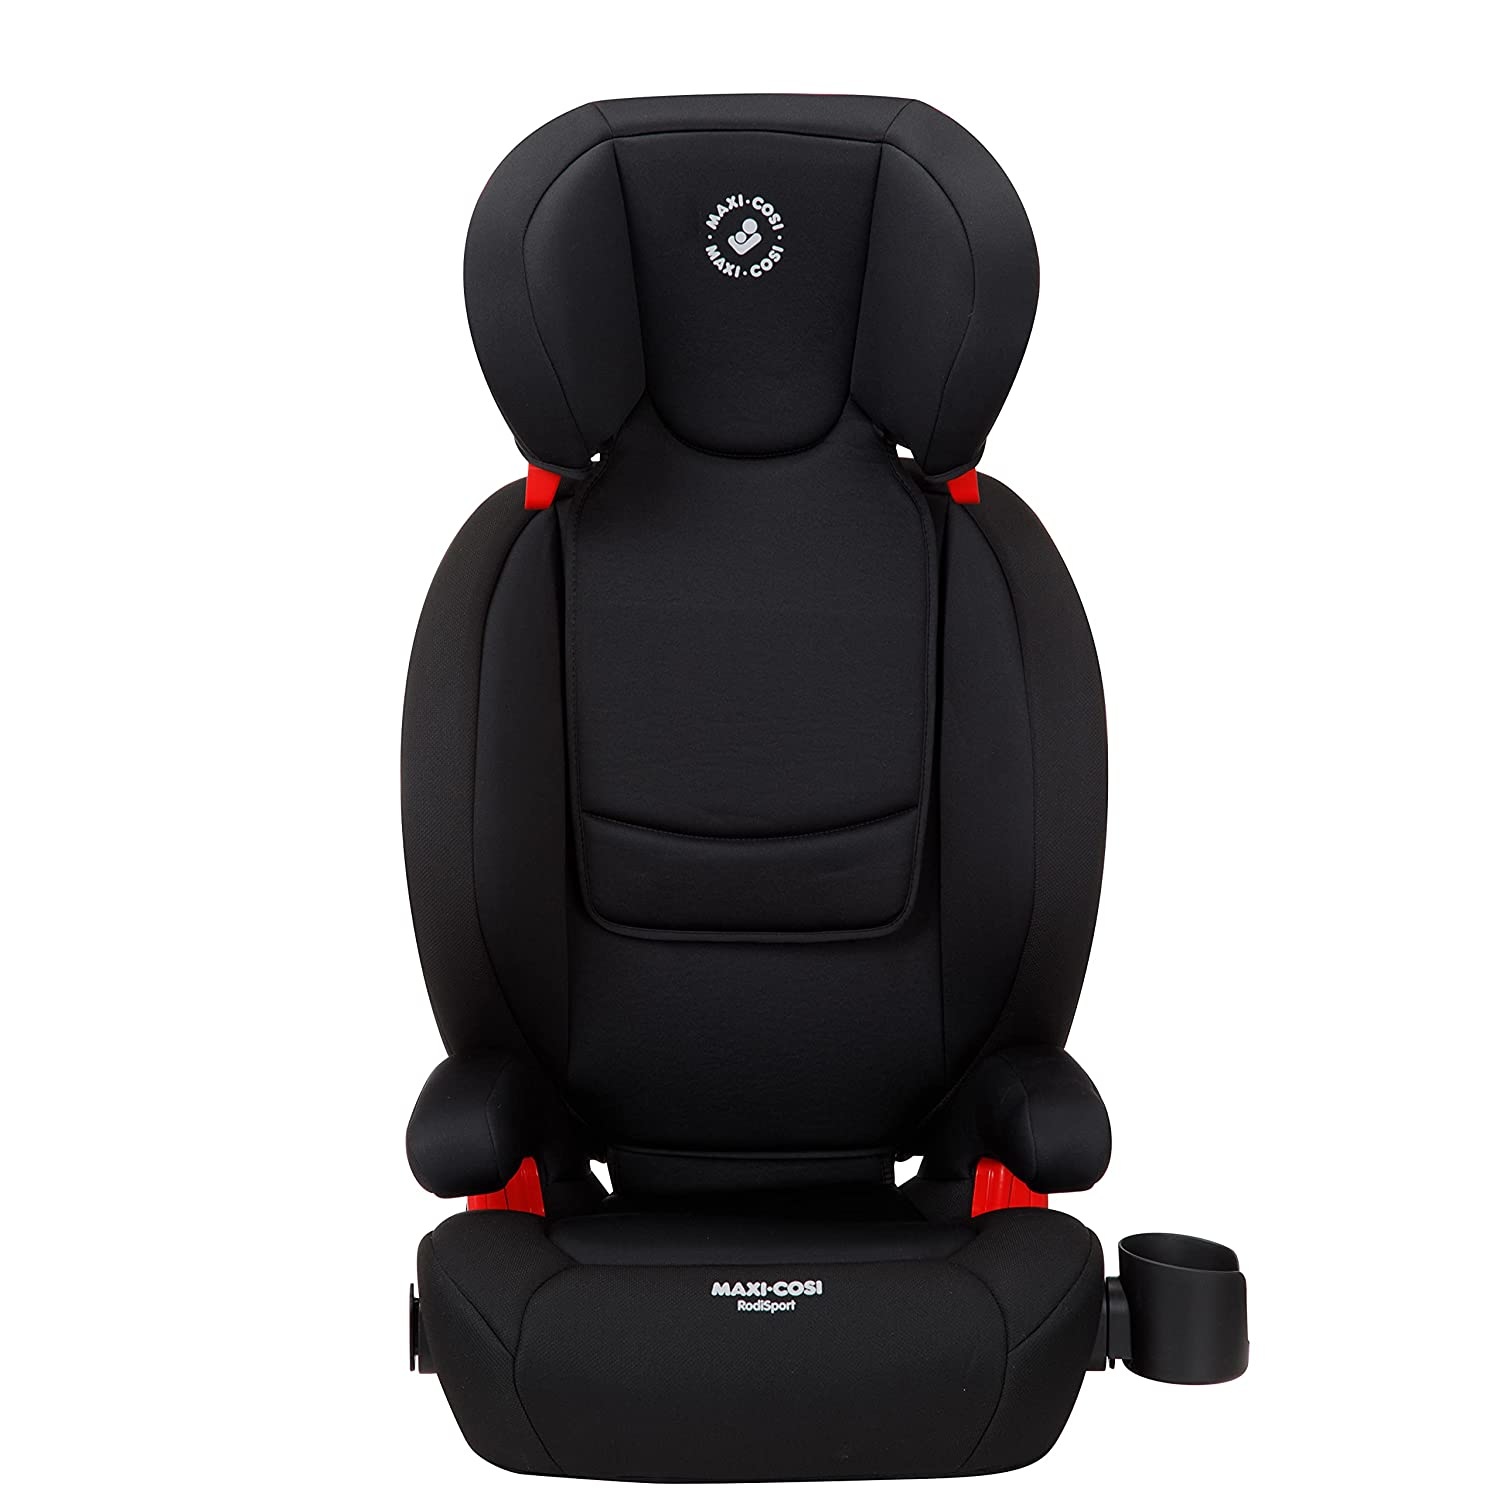 Maxi-Cosi Maxi-Cosi RodiSport Booster Car Seat (in store exclusive)